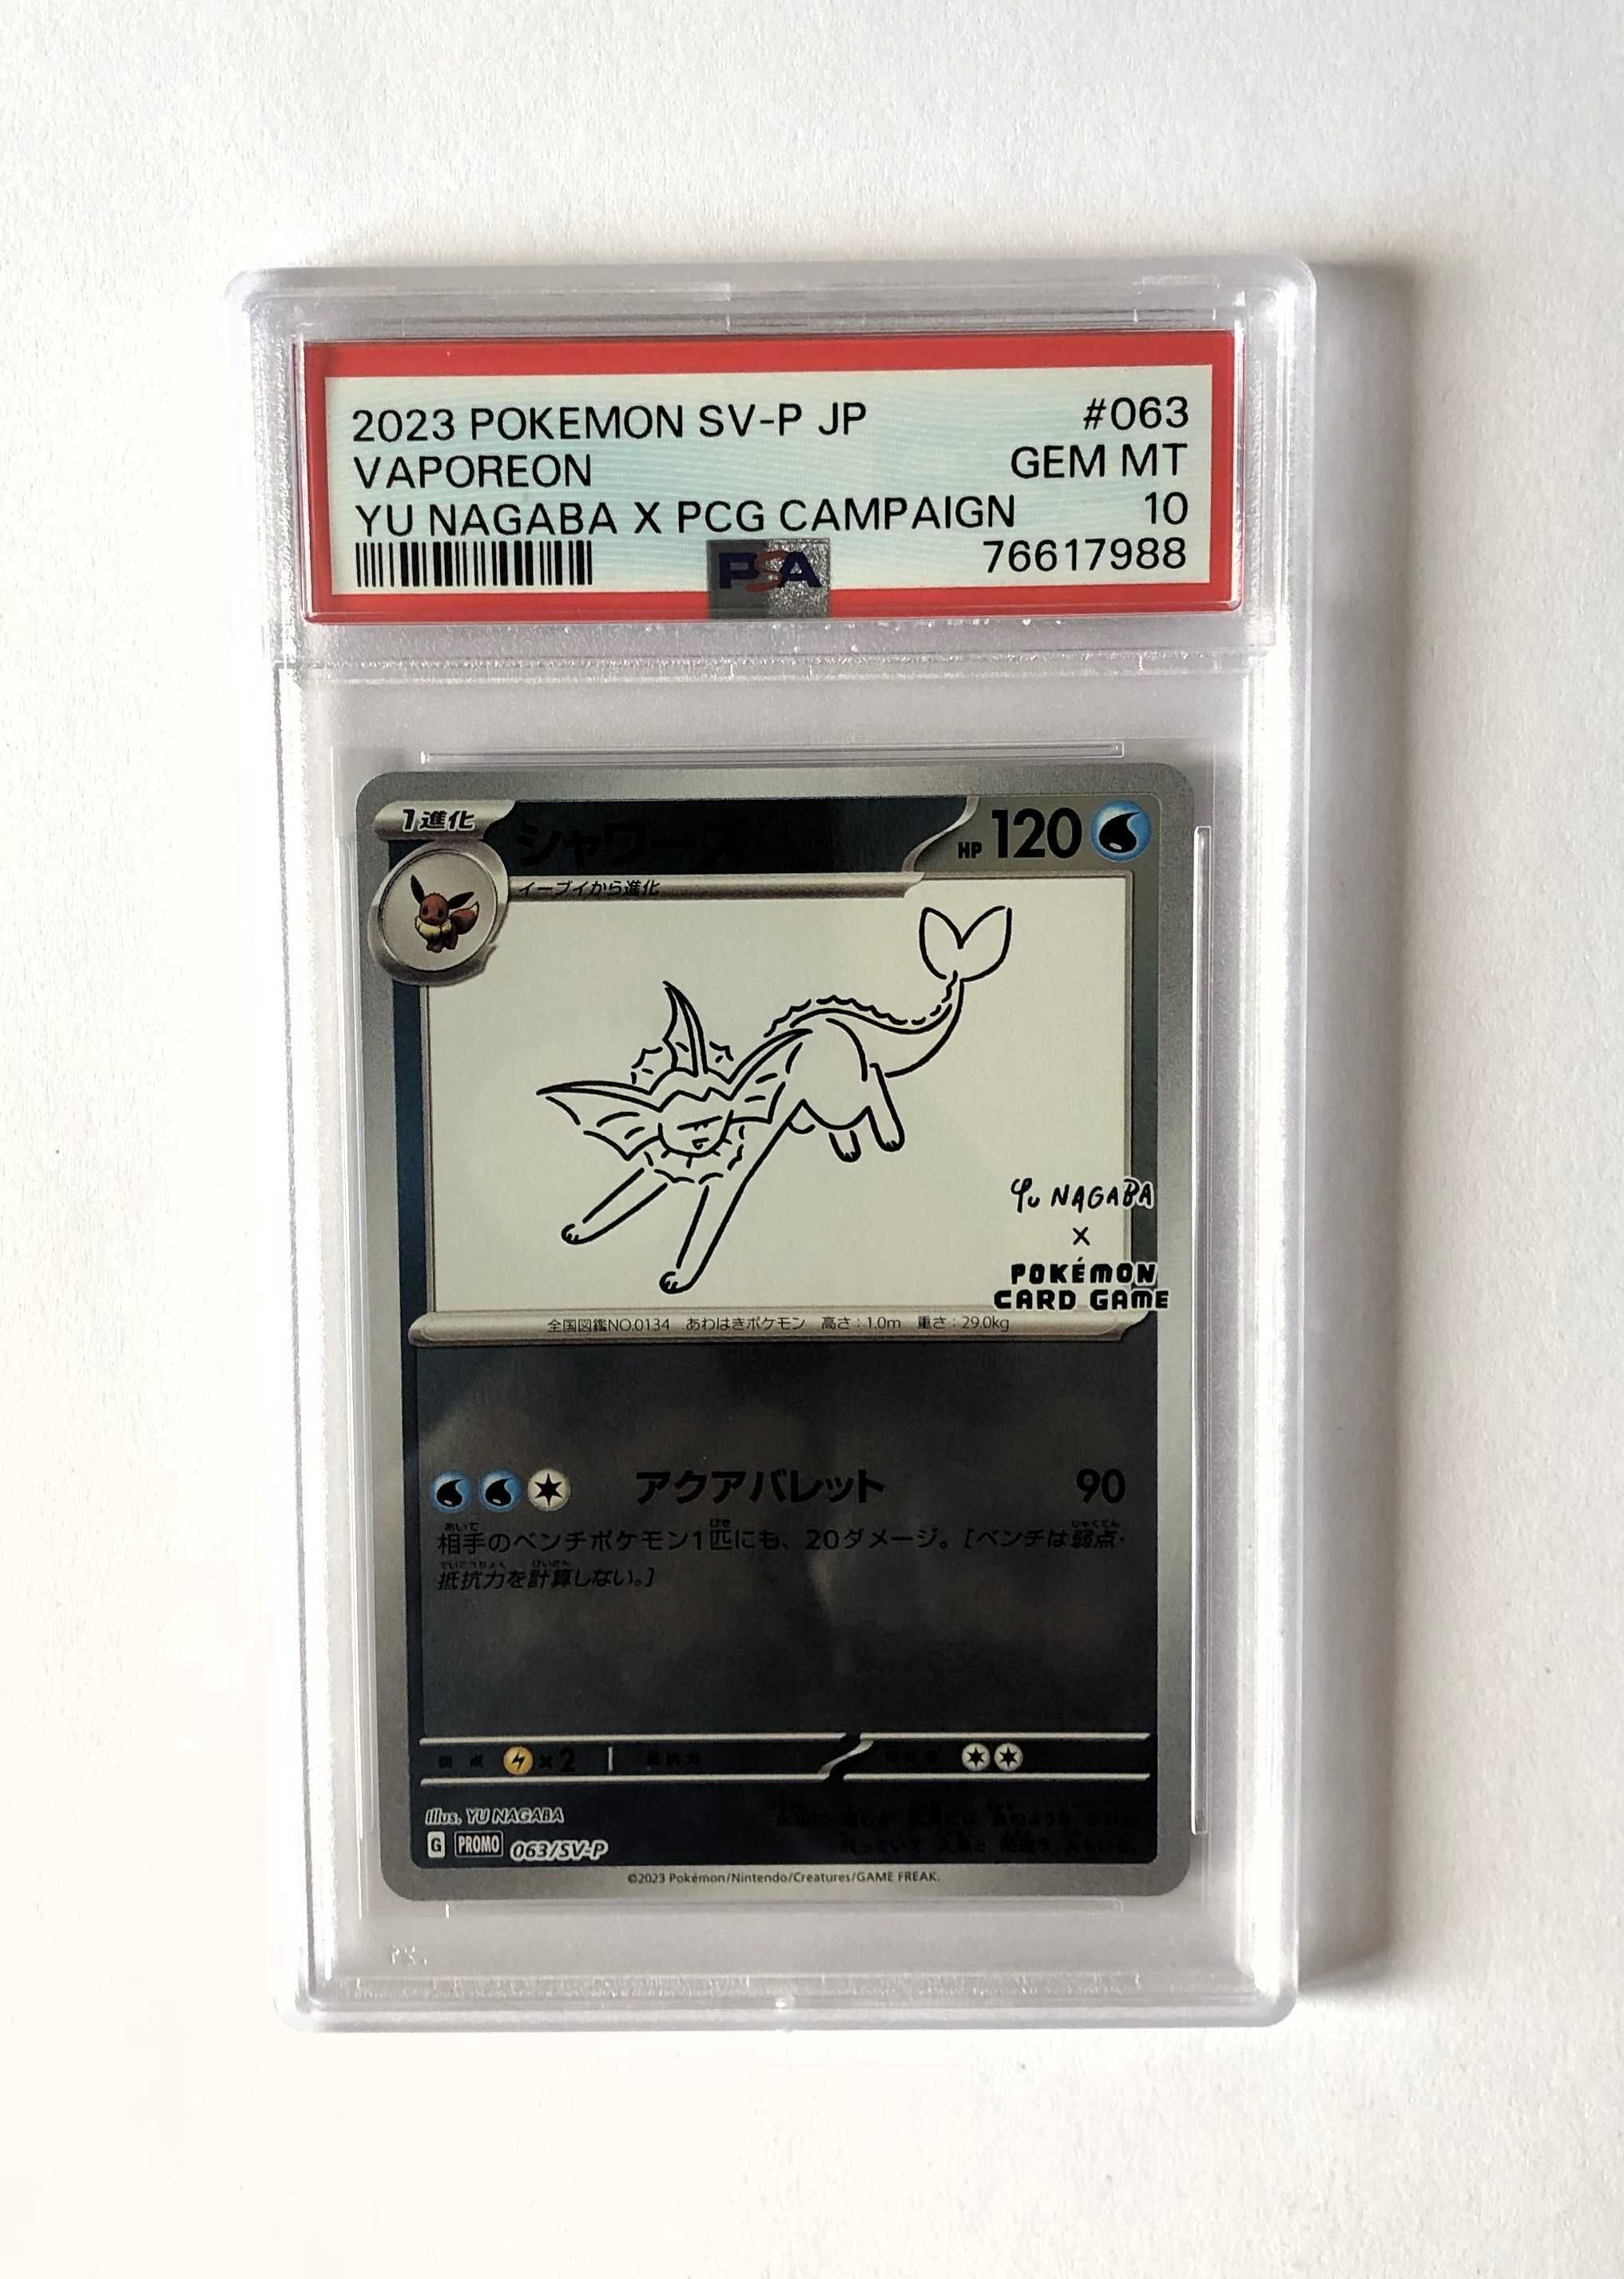 PSA 10 Pokemon Vaporeon SV-P 063 Japanese Yu Nagaba X PCG Campaign